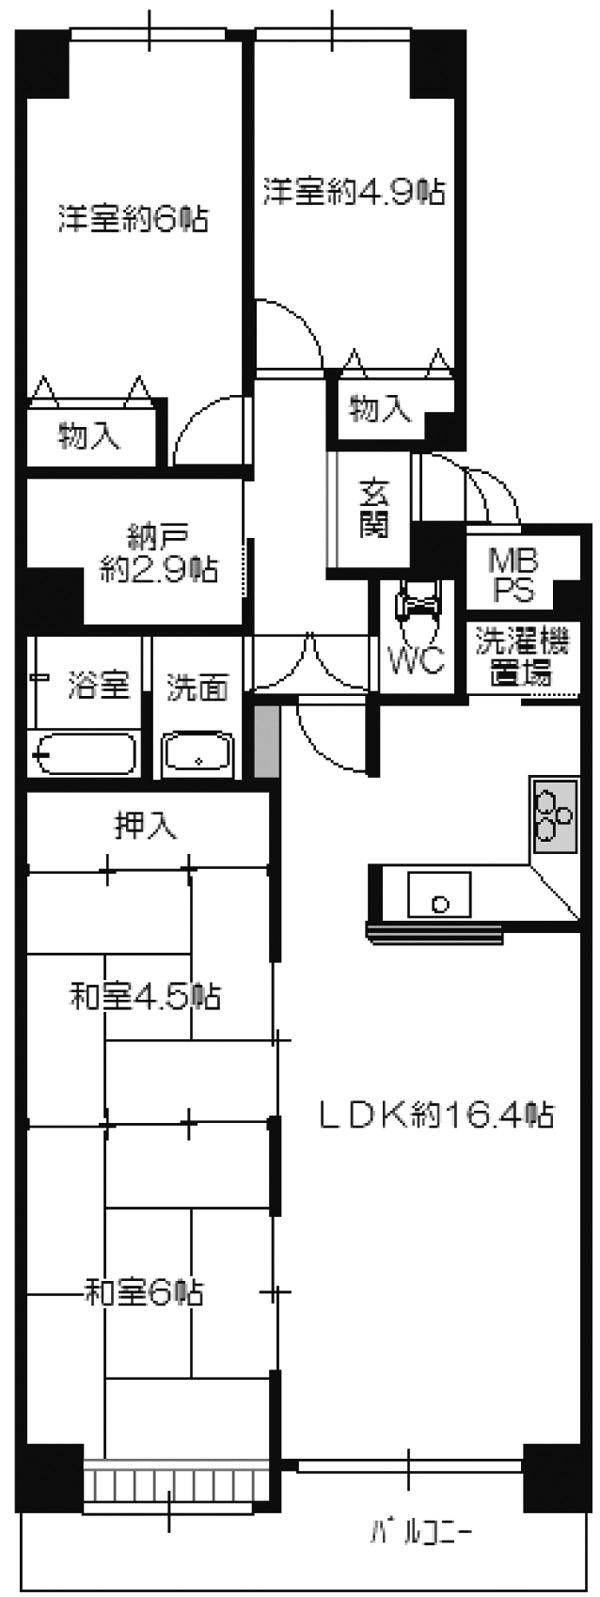 Floor plan. 4LDK + S (storeroom), Price 5.98 million yen, Occupied area 82.74 sq m , Balcony area 10.23 sq m